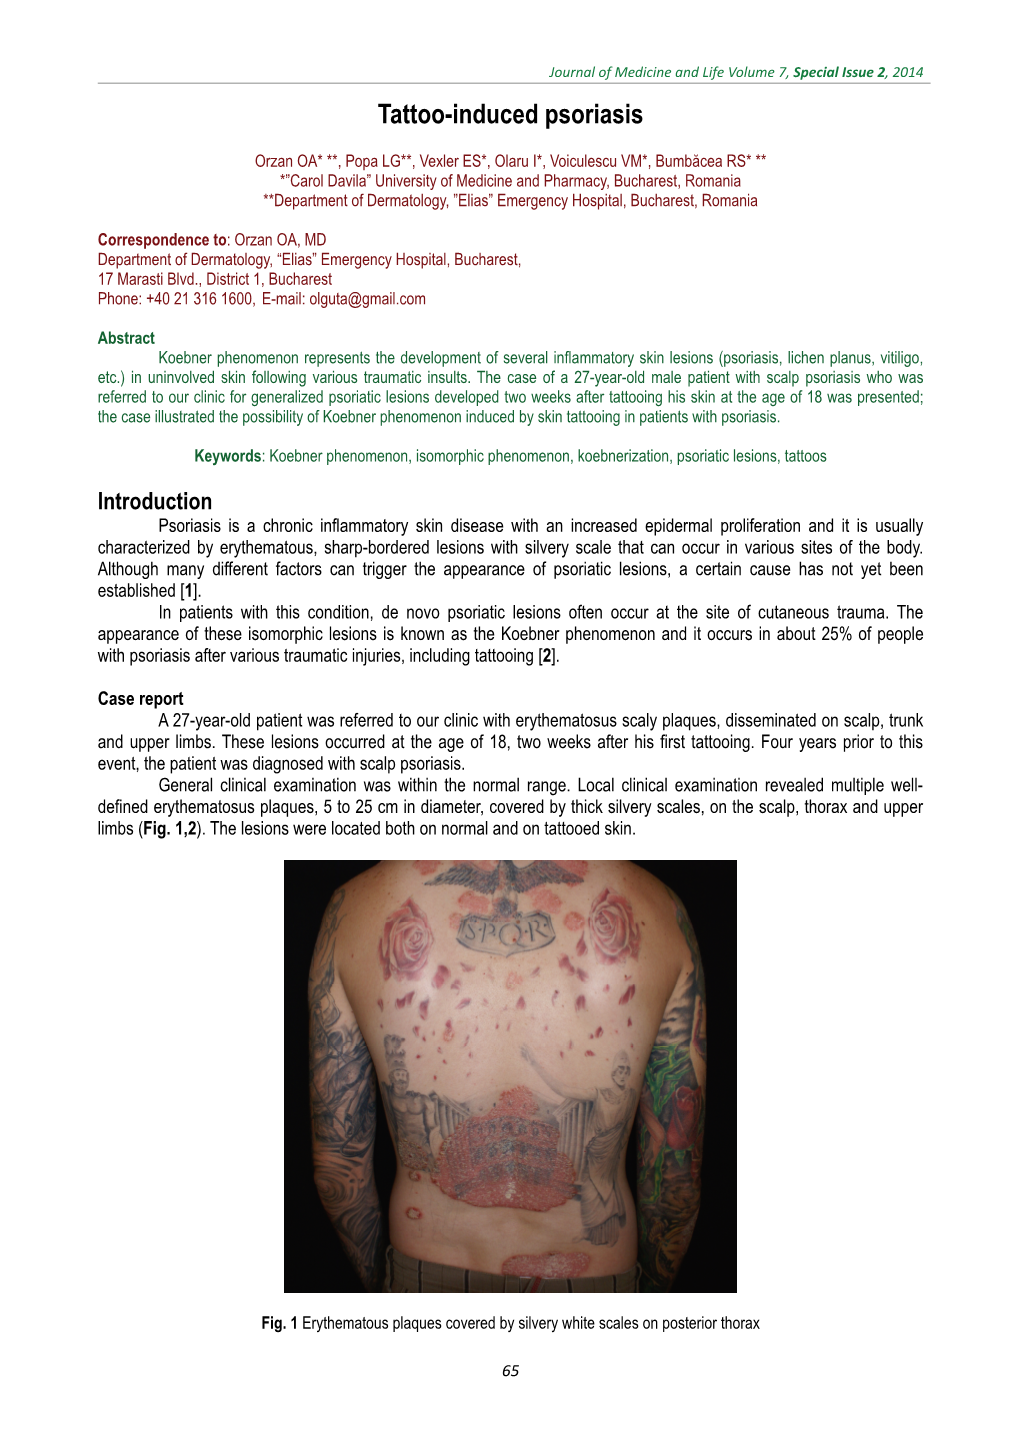 Tattoo-Induced Psoriasis